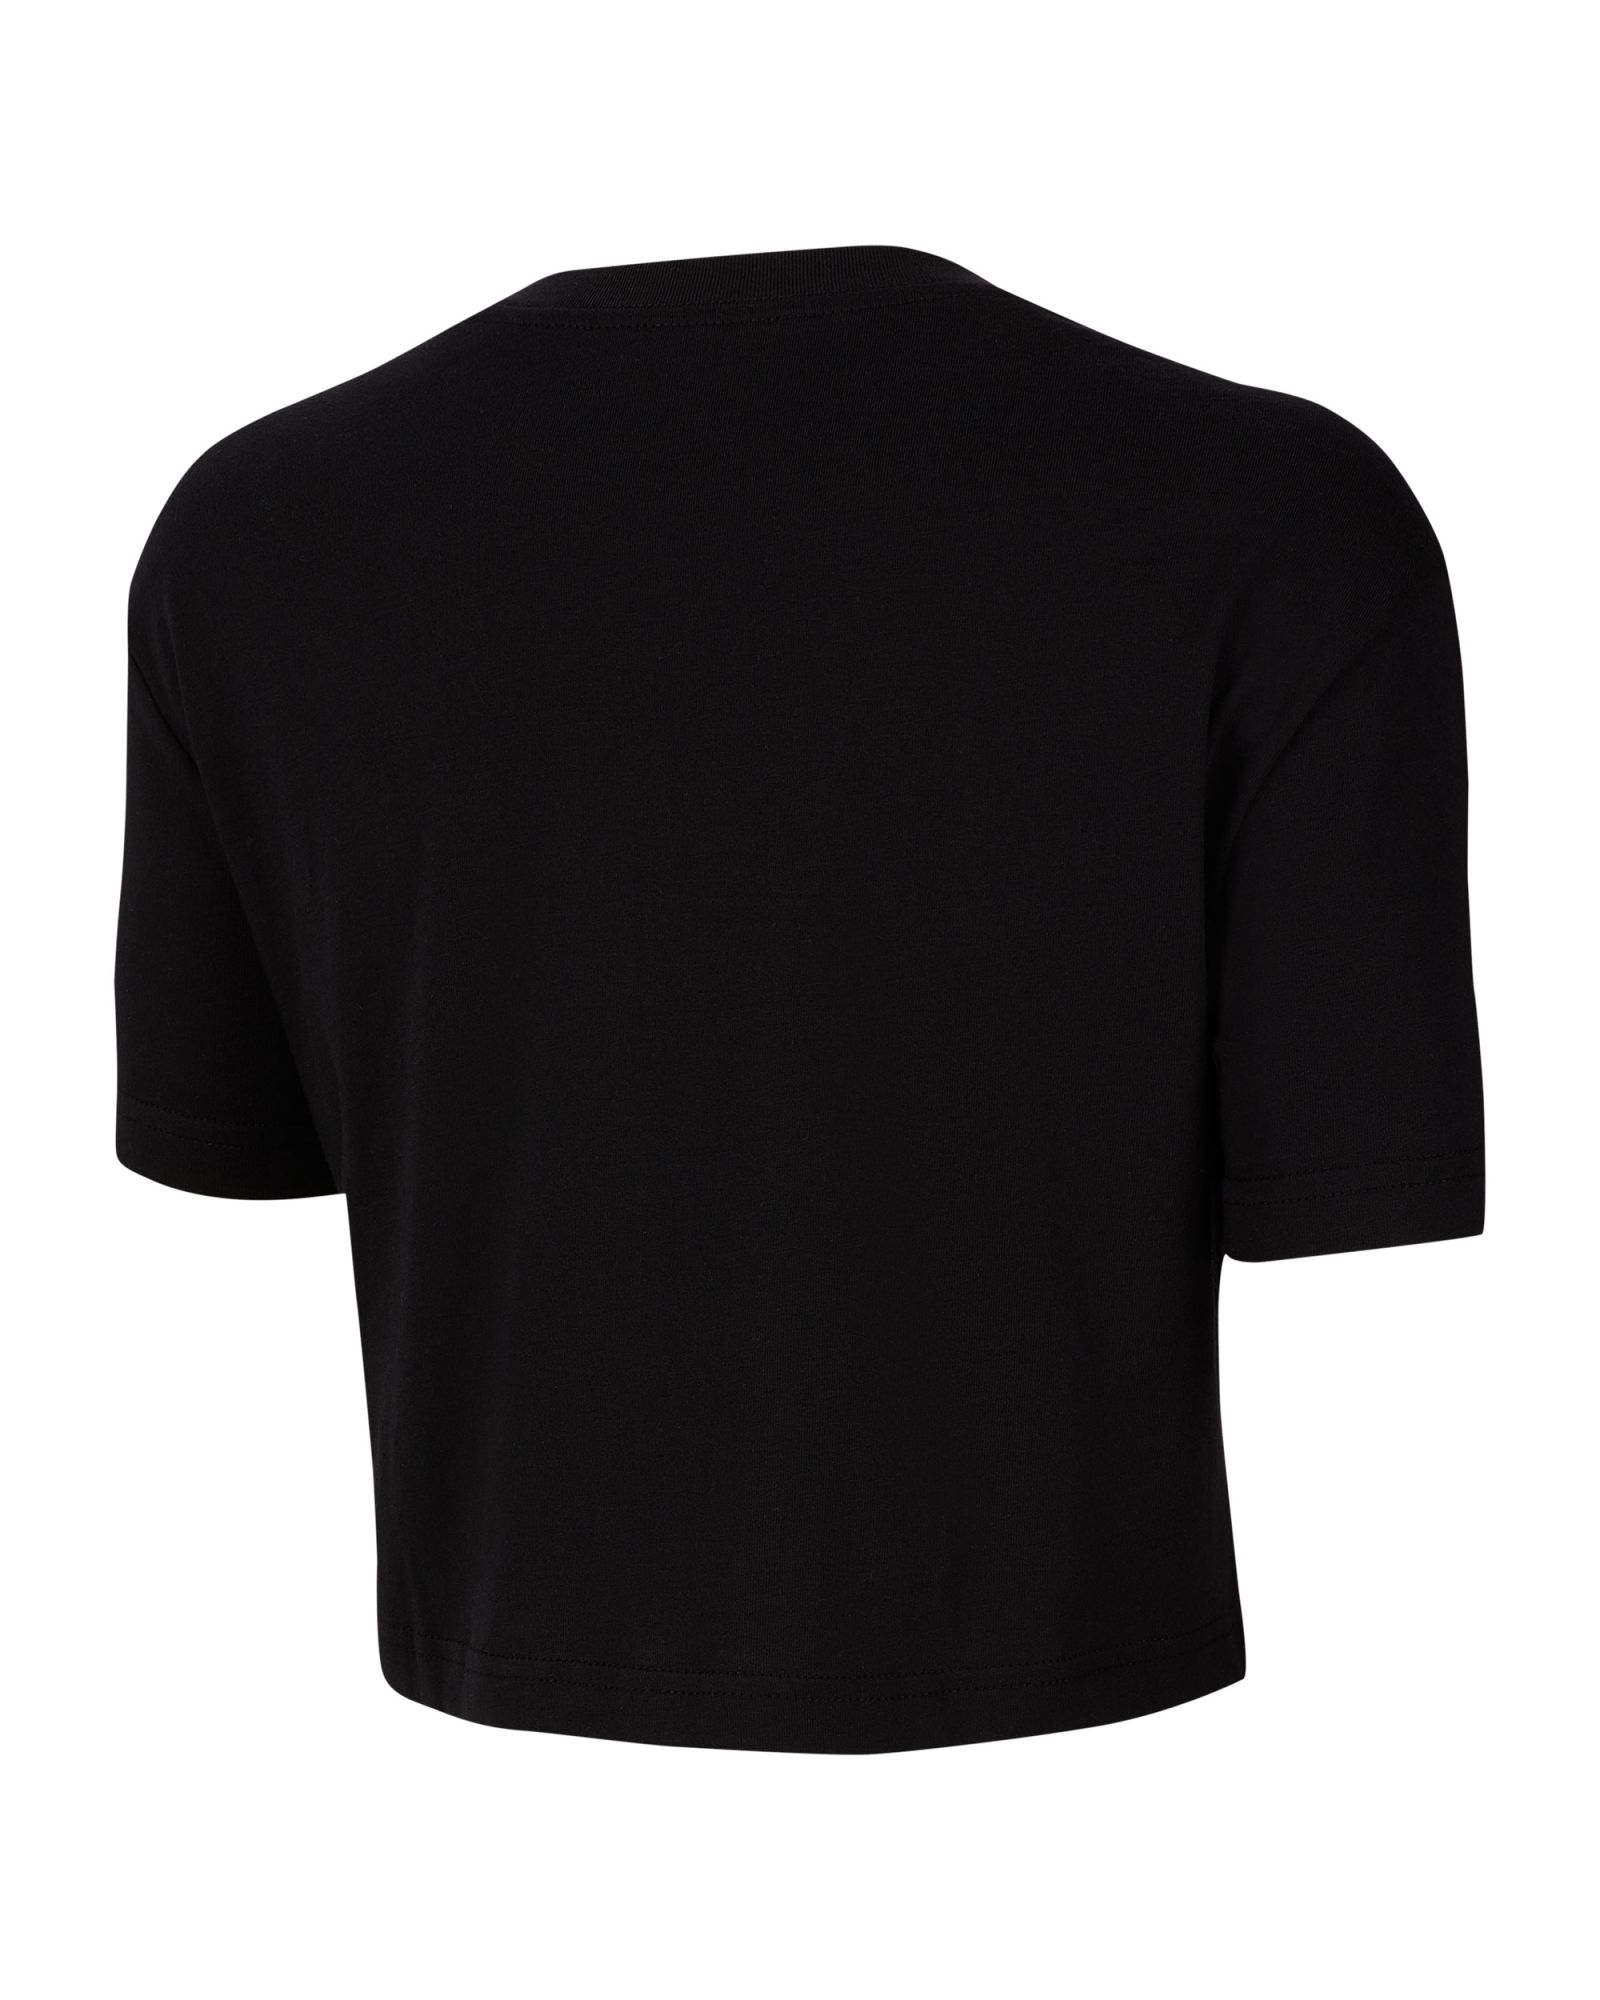 Camiseta NSW Varsity Cropped Negro - Fútbol Factory